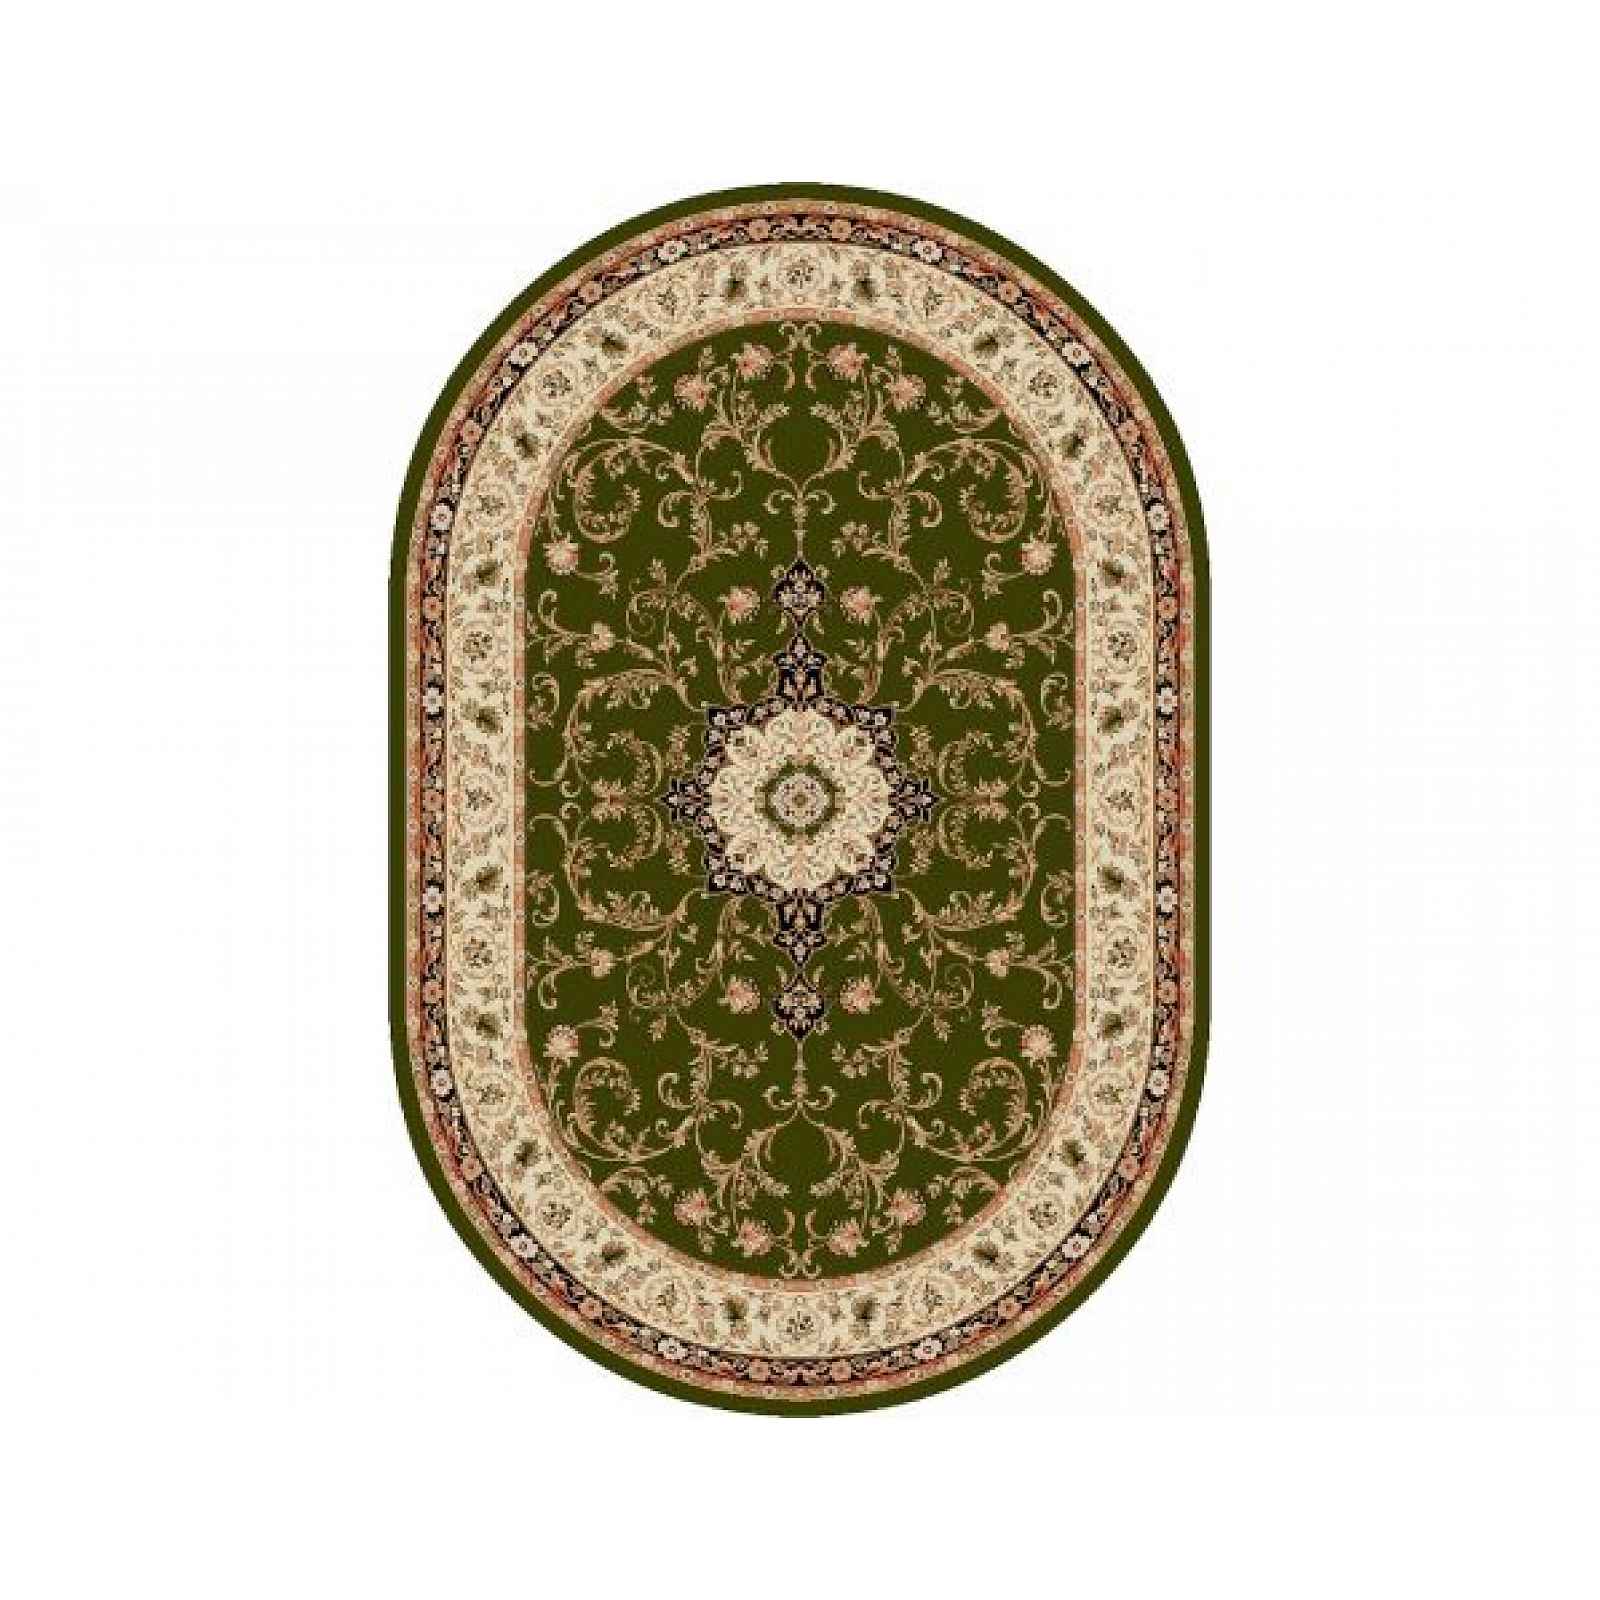 Oválný kusový koberec Lotos 523-310o, 80x150 cm